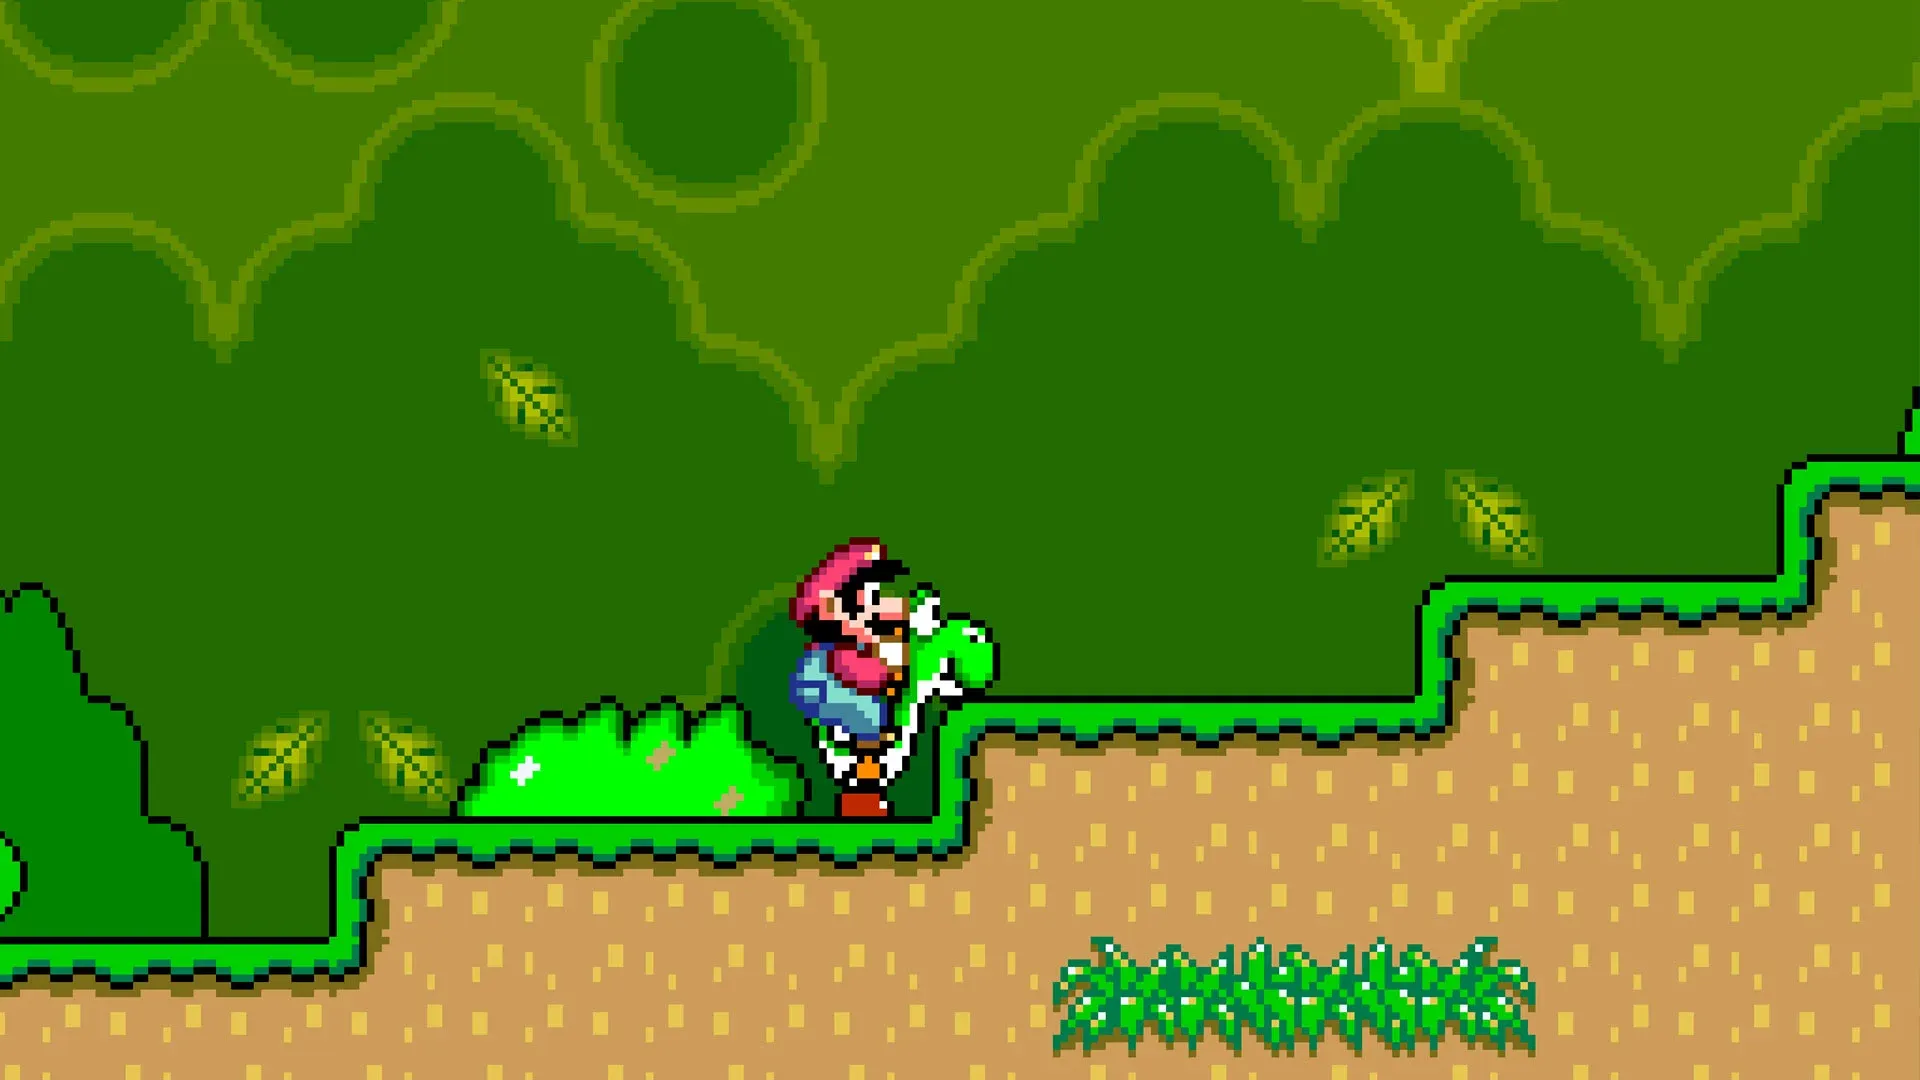 Super Mario World - Memória BIT